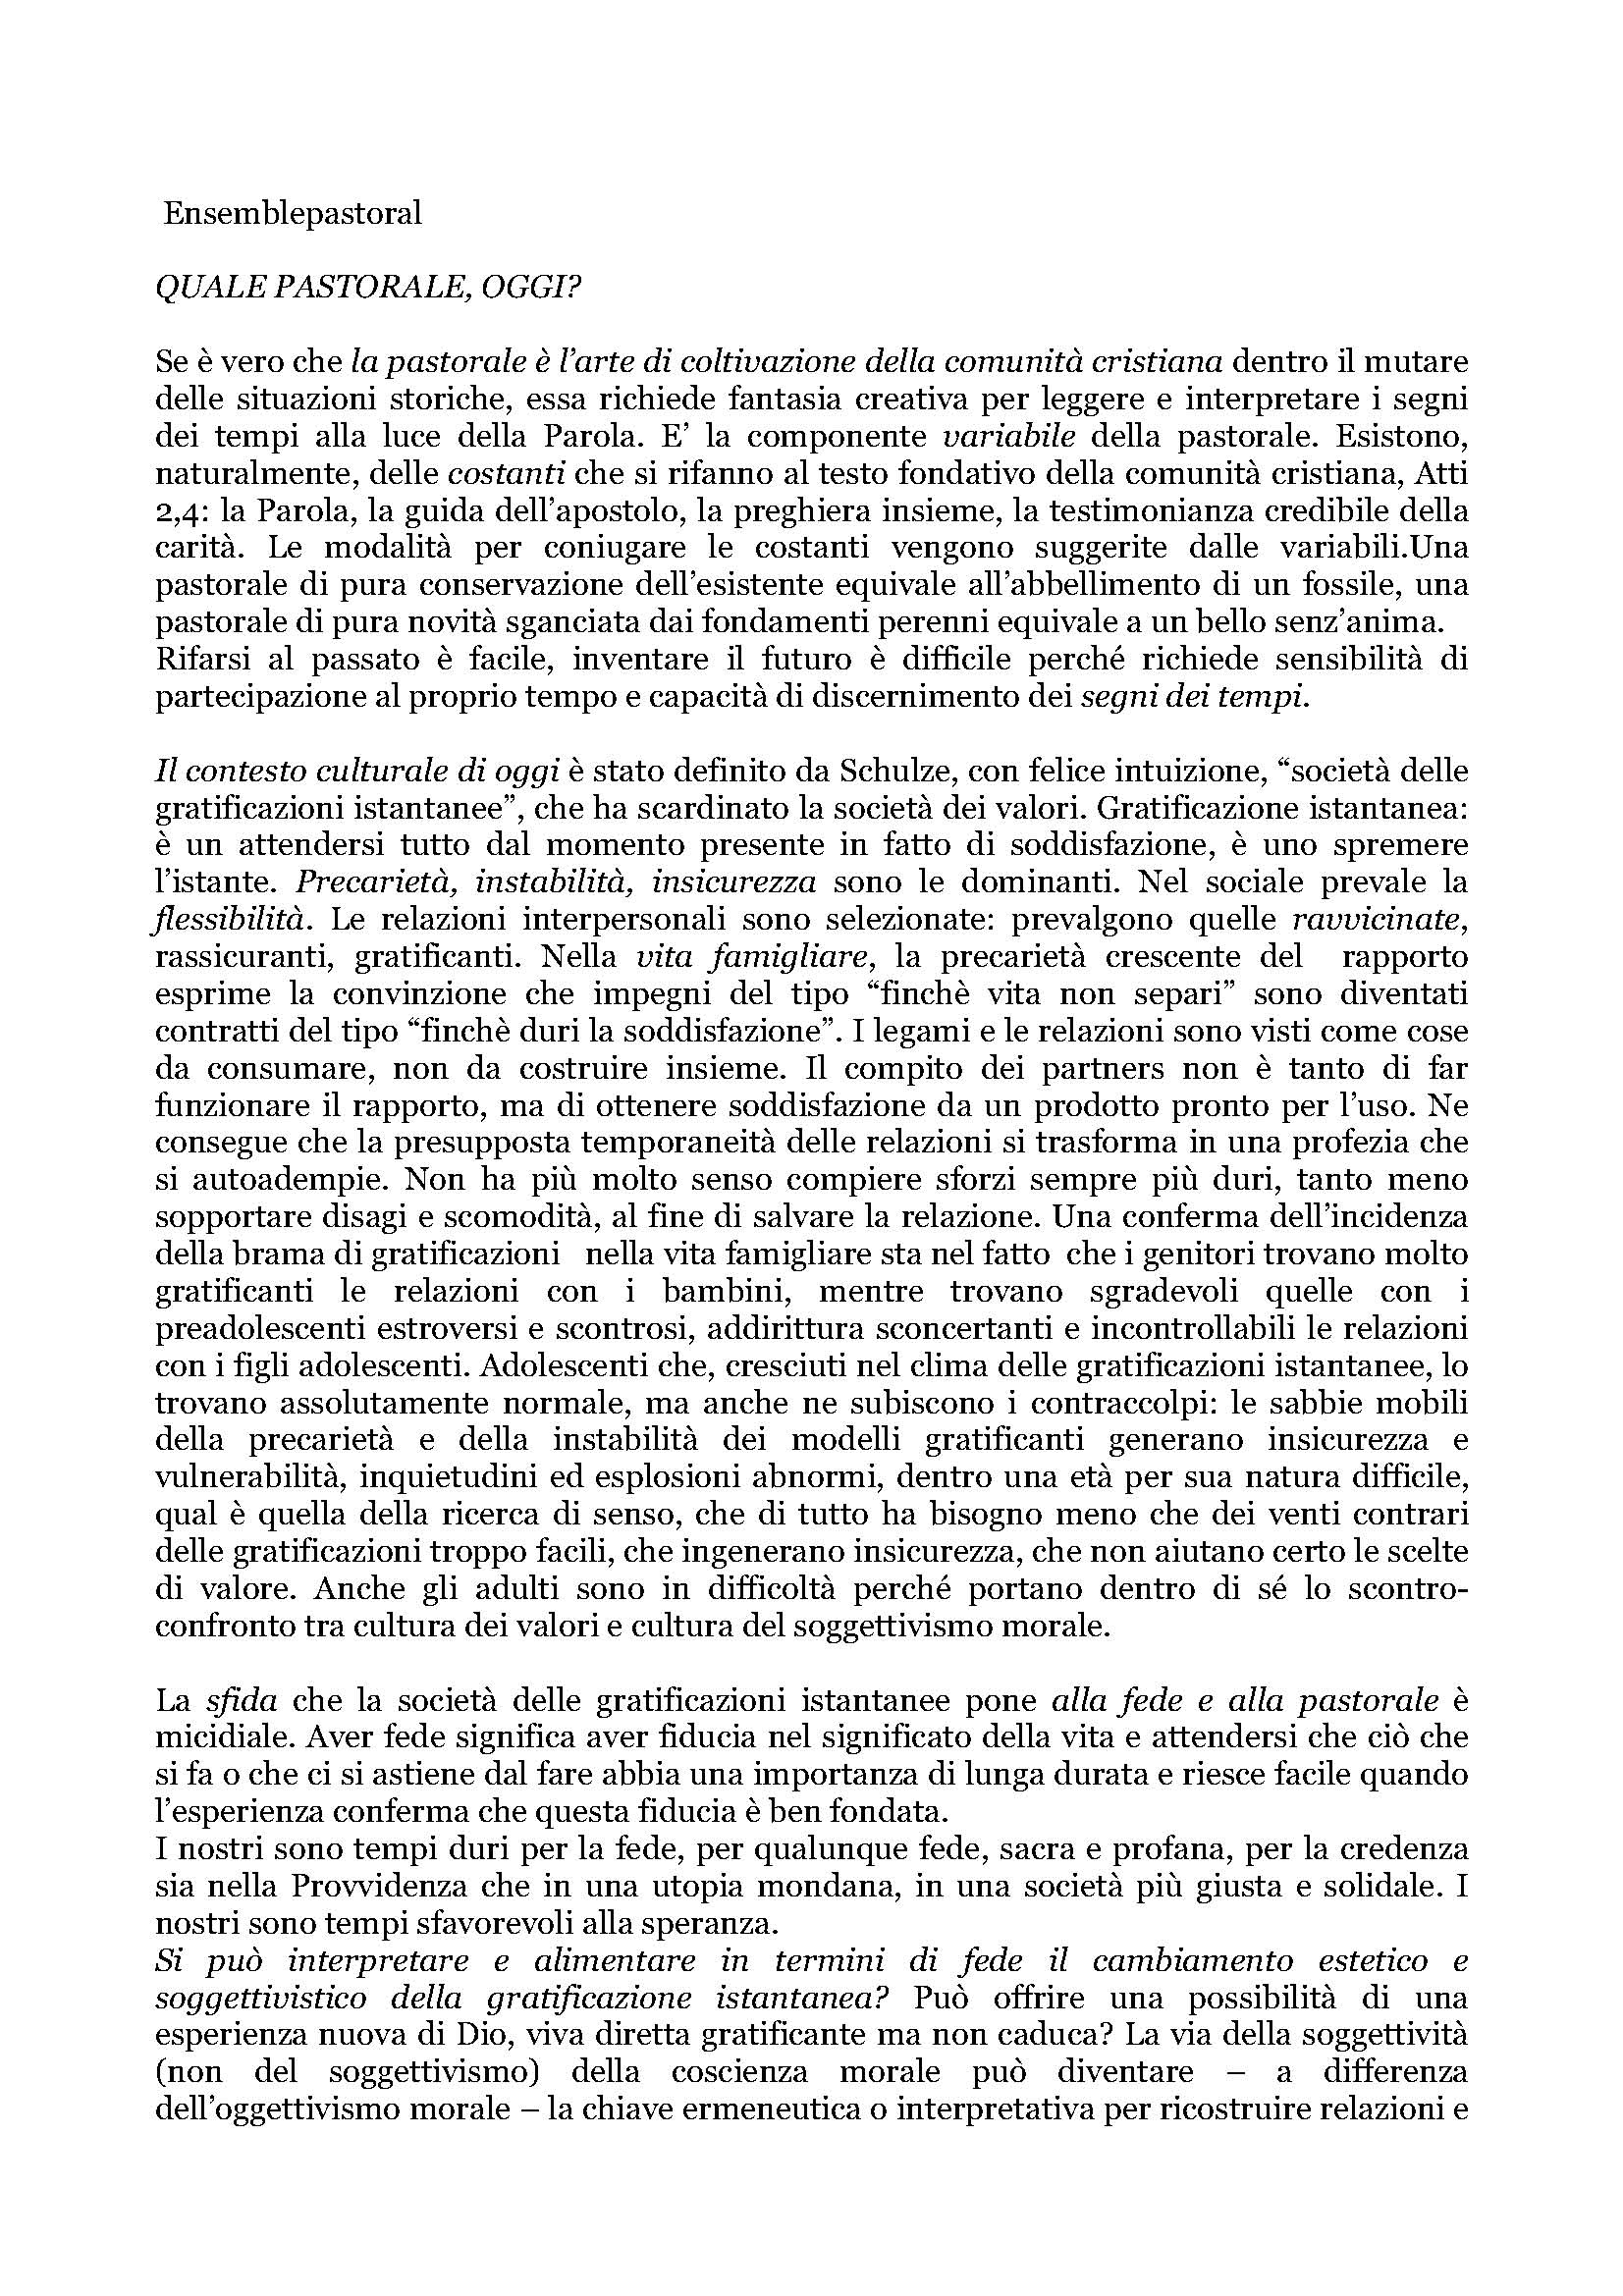 Ensemblepastoral_QUALE_PASTORALE_OGGI.pdf